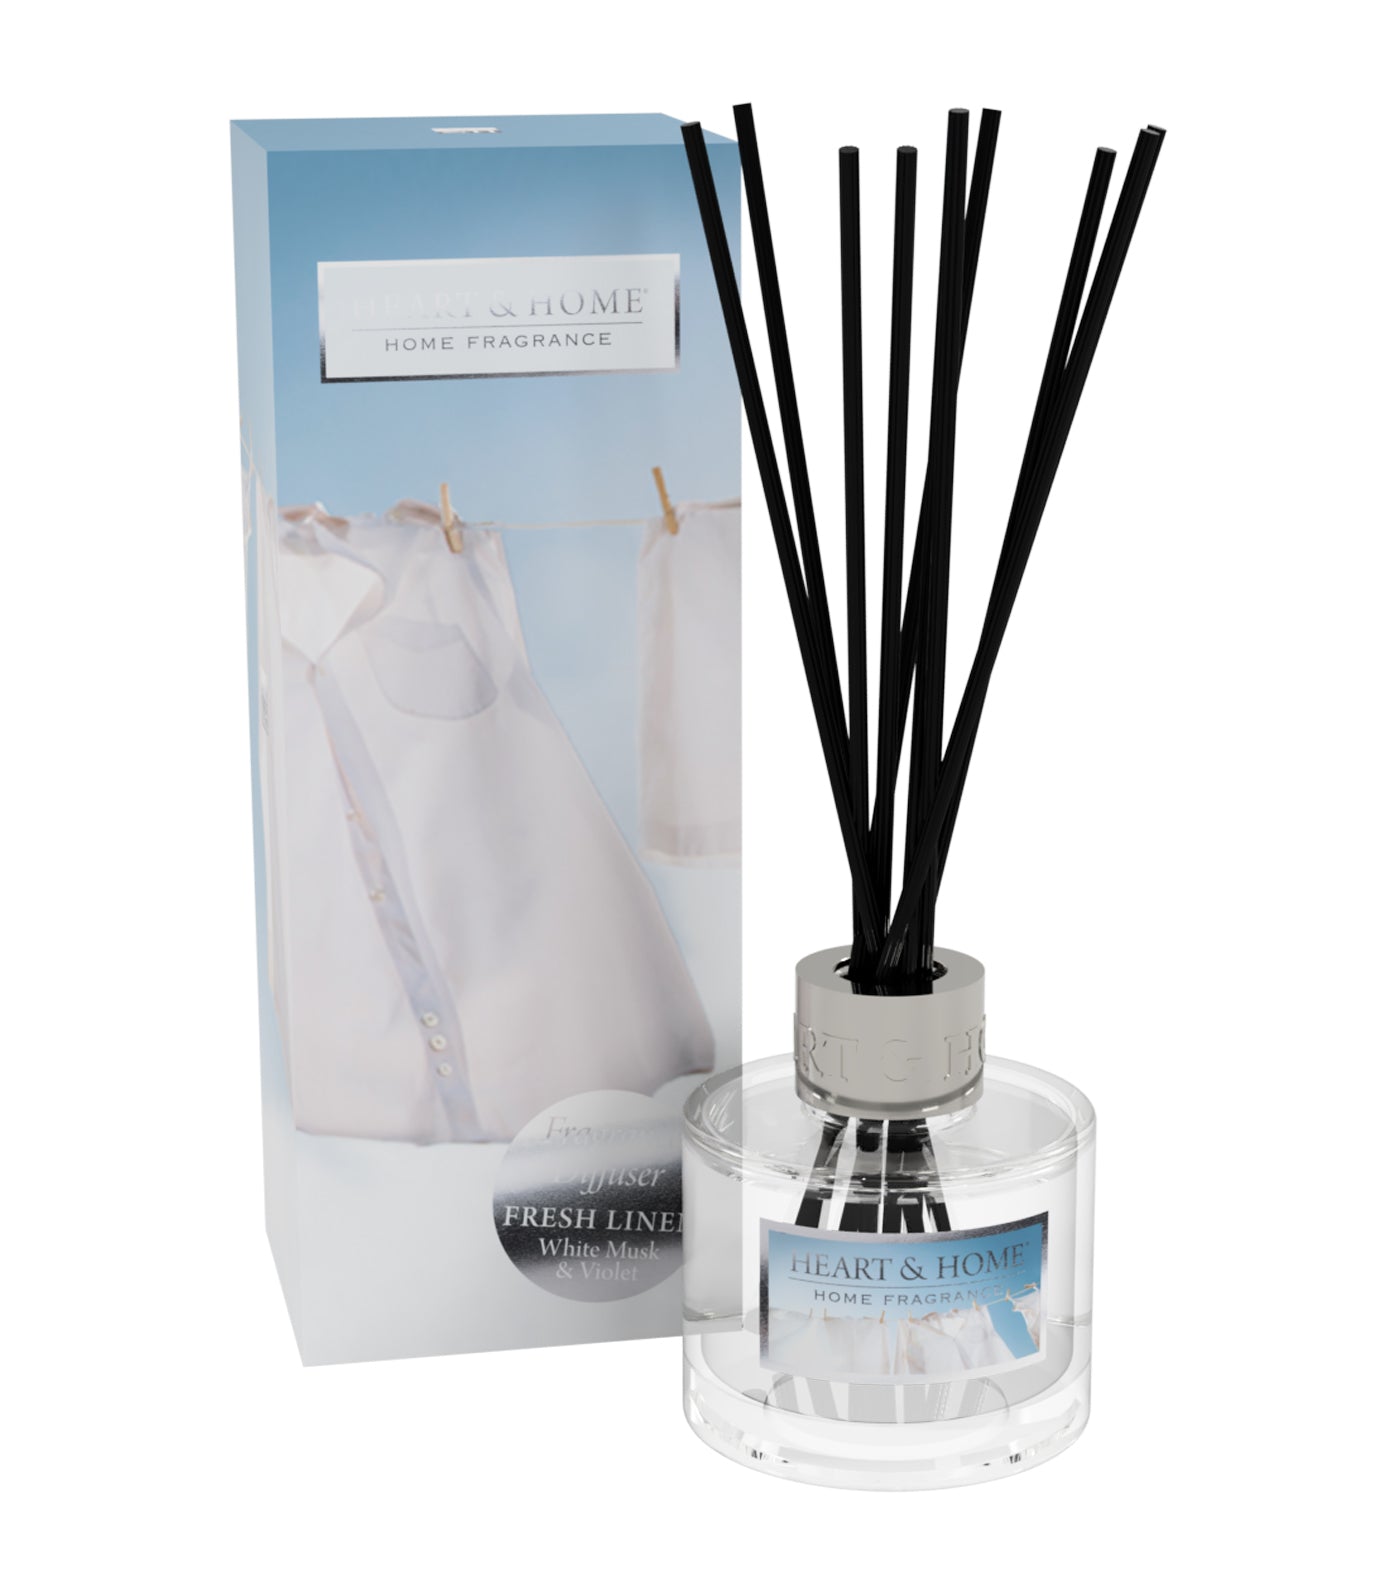 heart & home fresh linen - fragrance diffuser